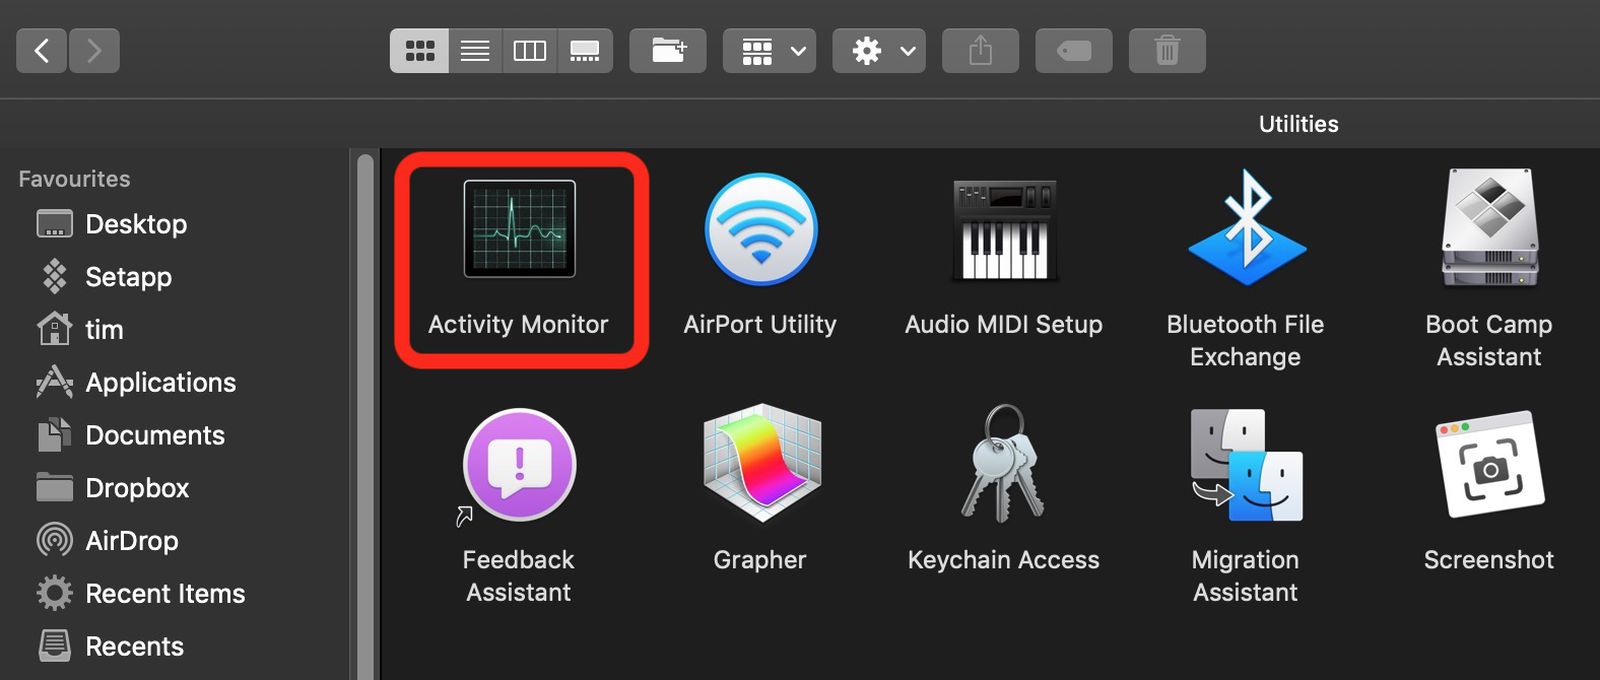 Mac activity monitor